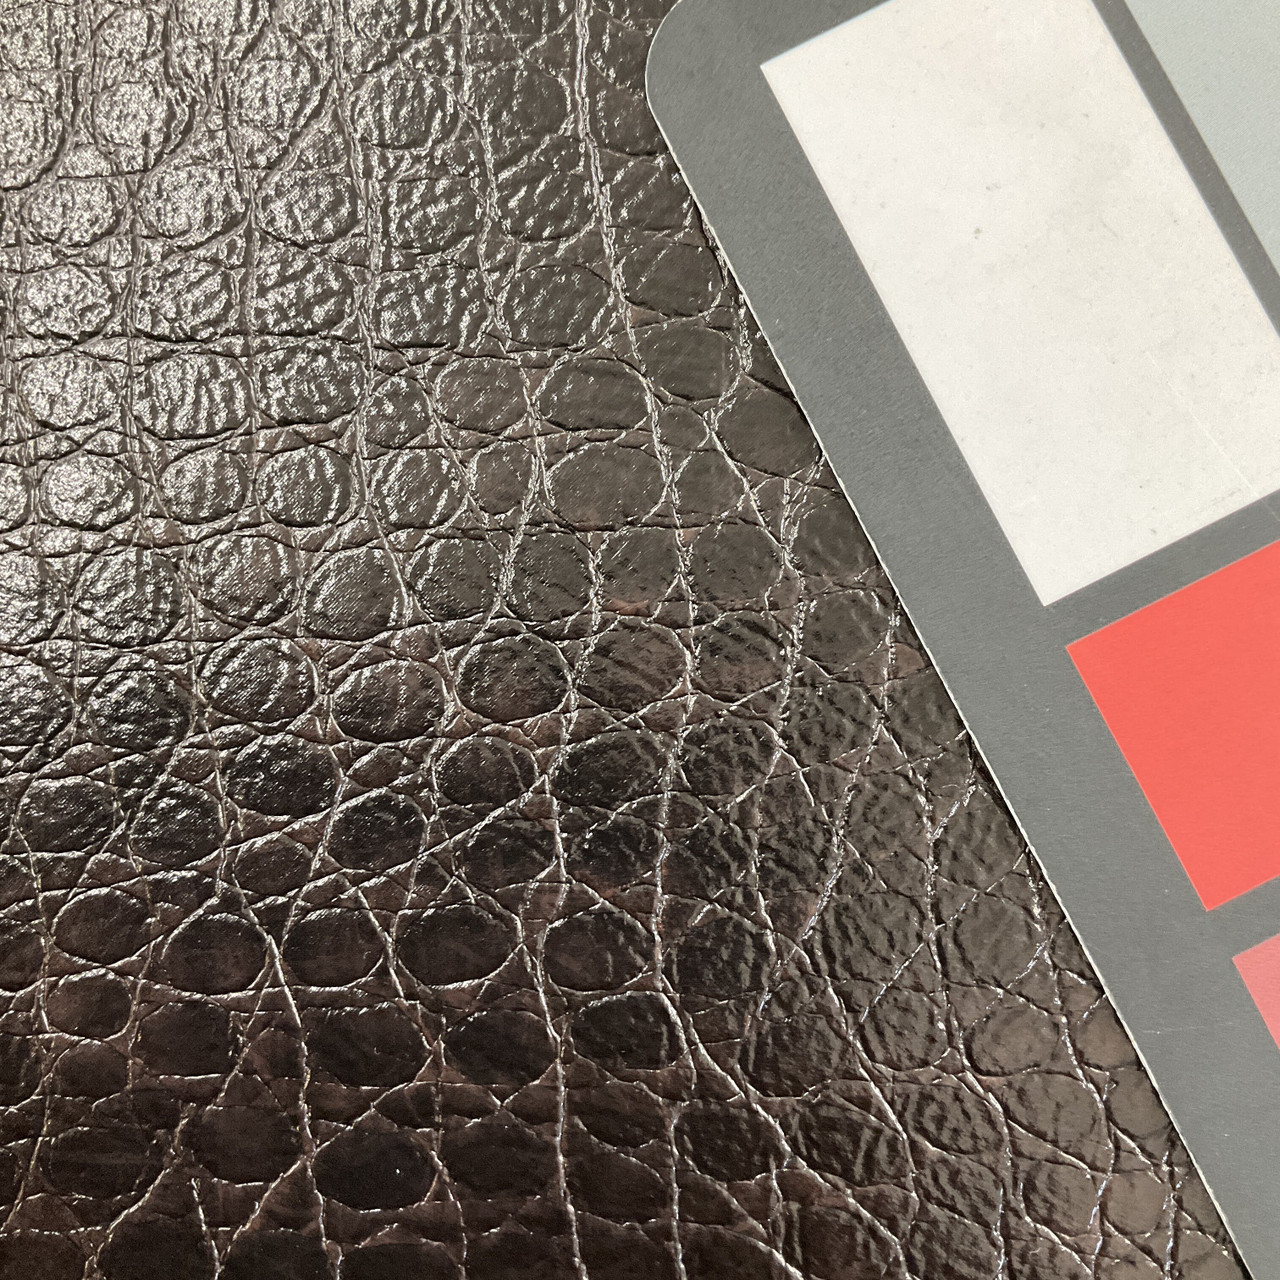 Metallic Embossed Diamond Faux Leather Sheet Fabric Vinyl for 